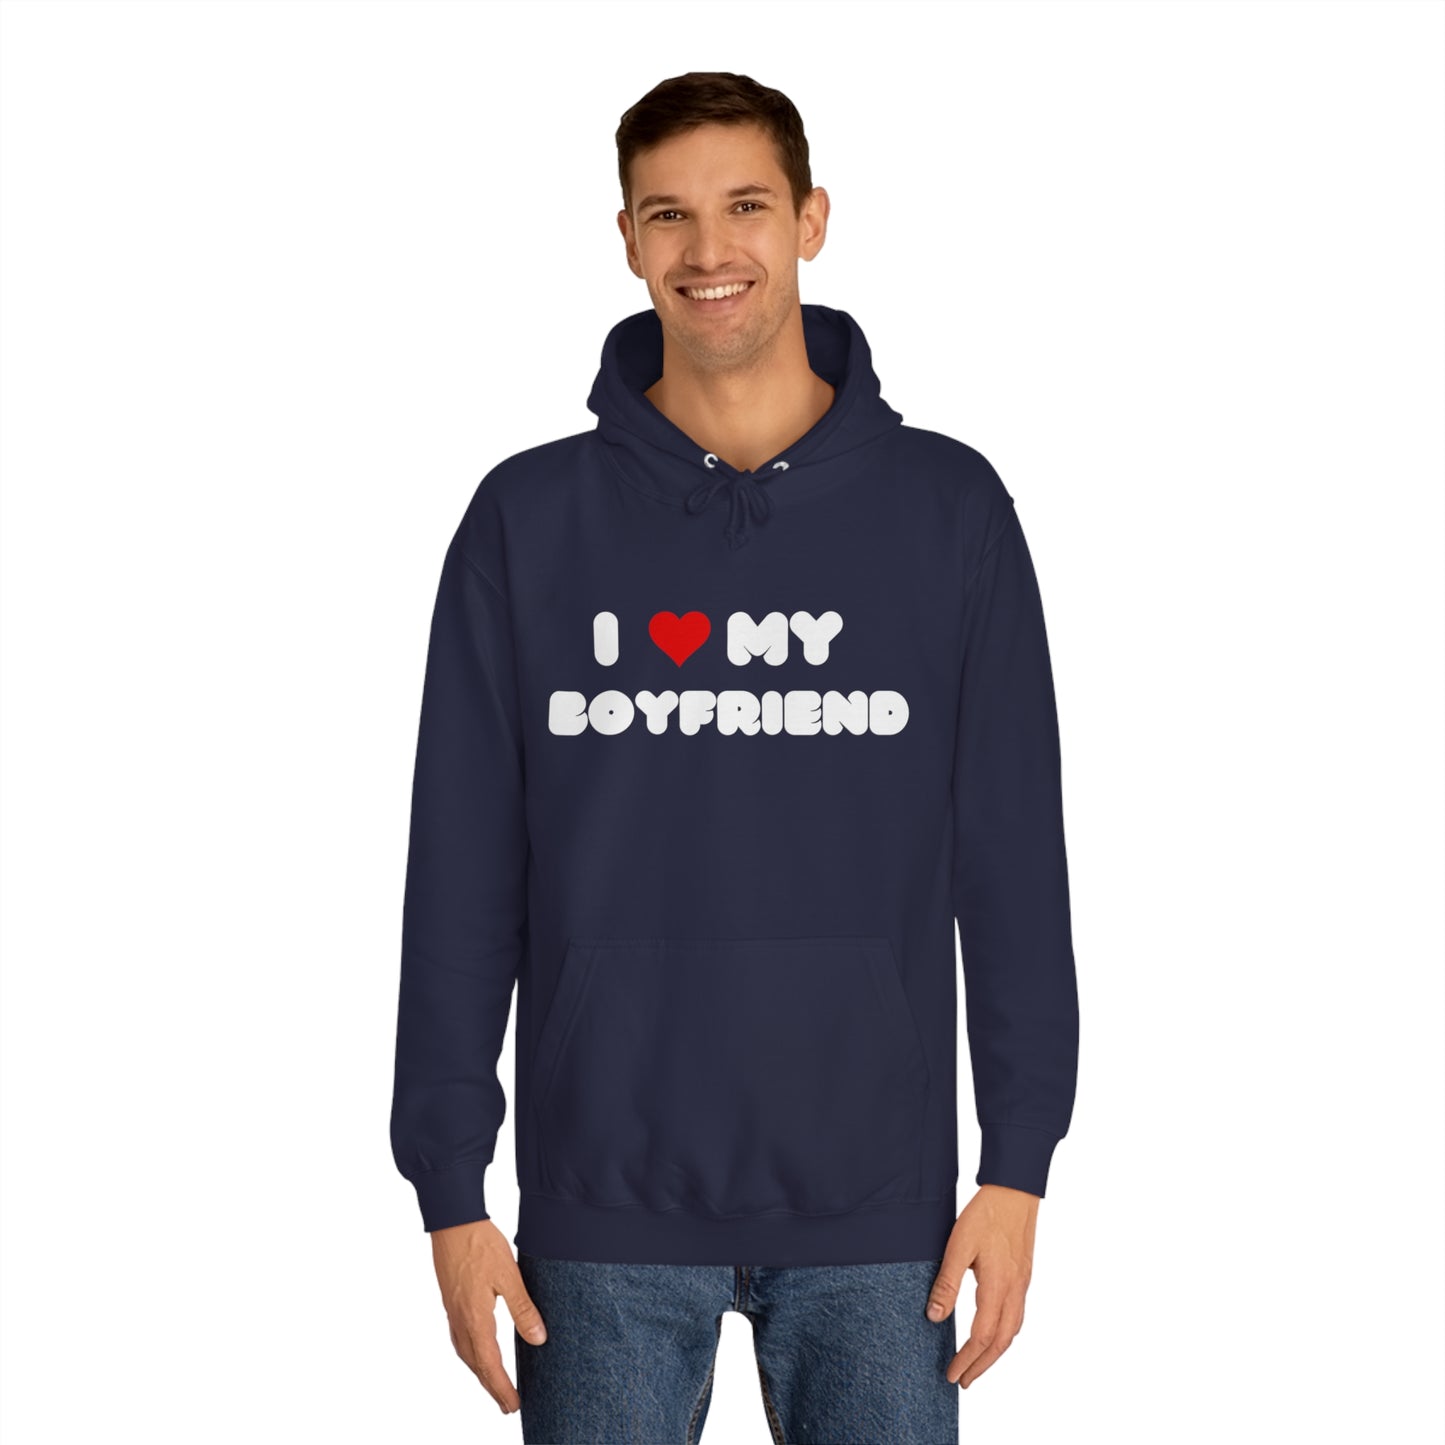 I love my Boyfriend - Women's Hoodie